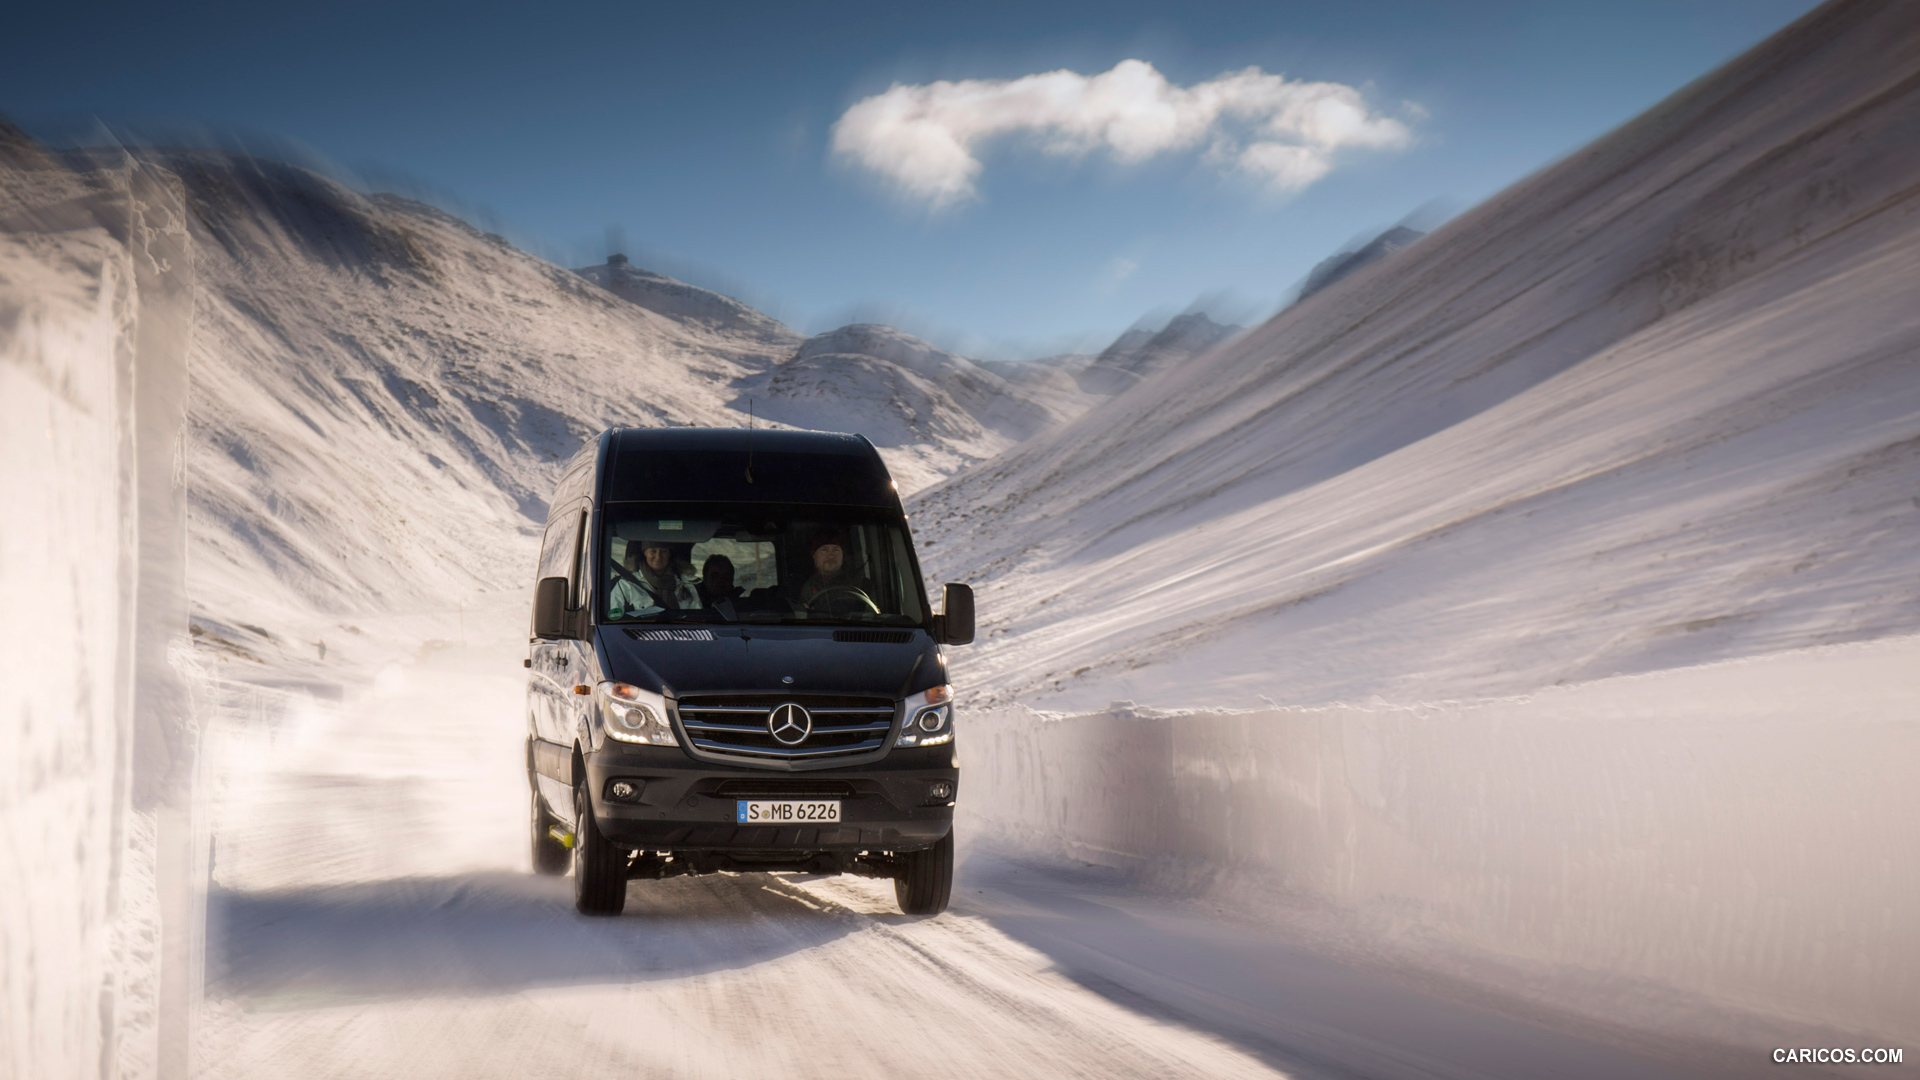 2015 Mercedes-Benz Sprinter 316 BlueTec 4X4 - In Snow - Front, #46 of 126